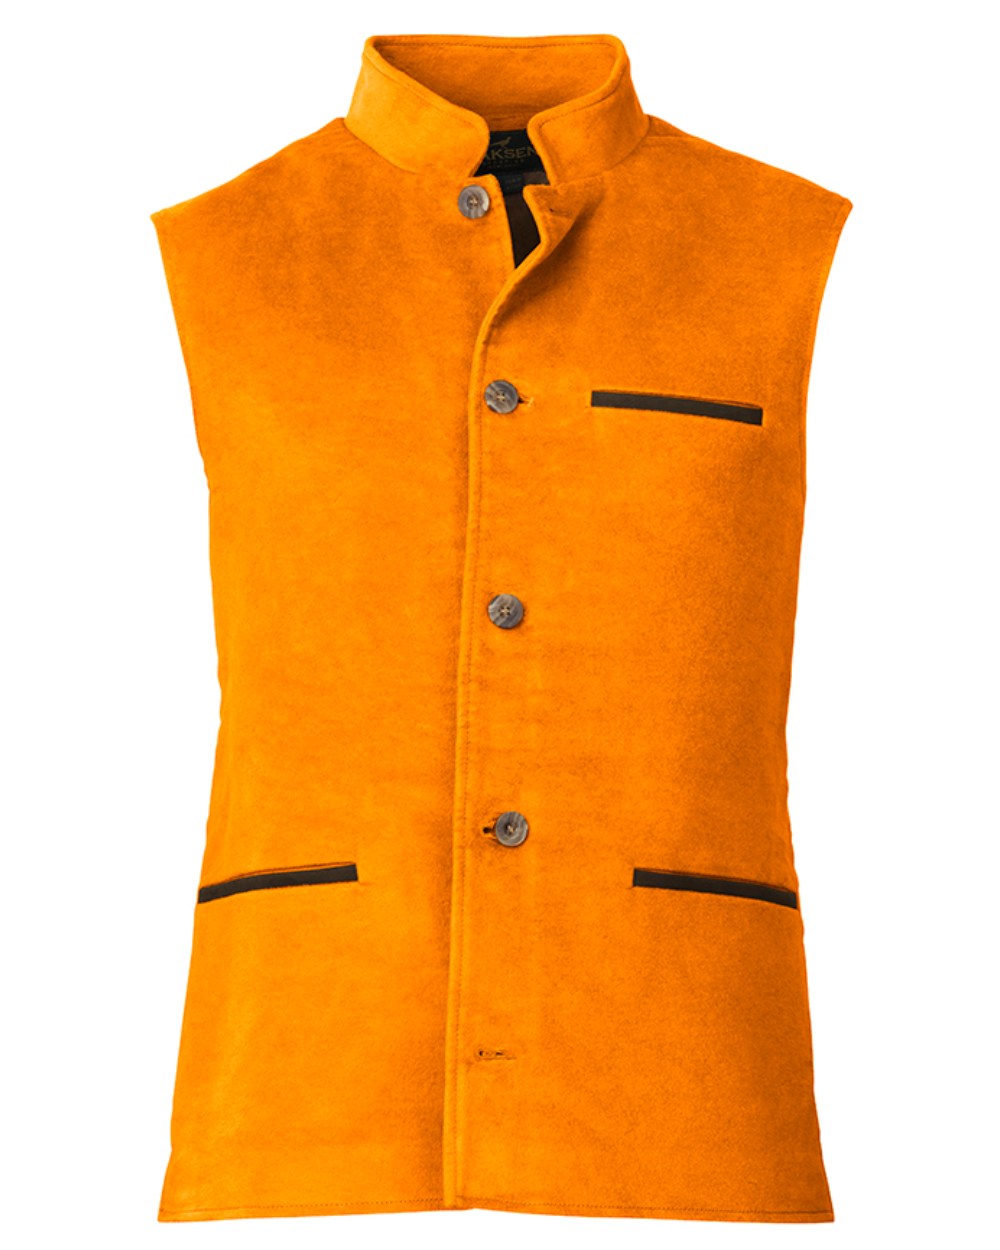 Blaze Orange Coloured Laksen Belgravia Fife Vest On A White Background 